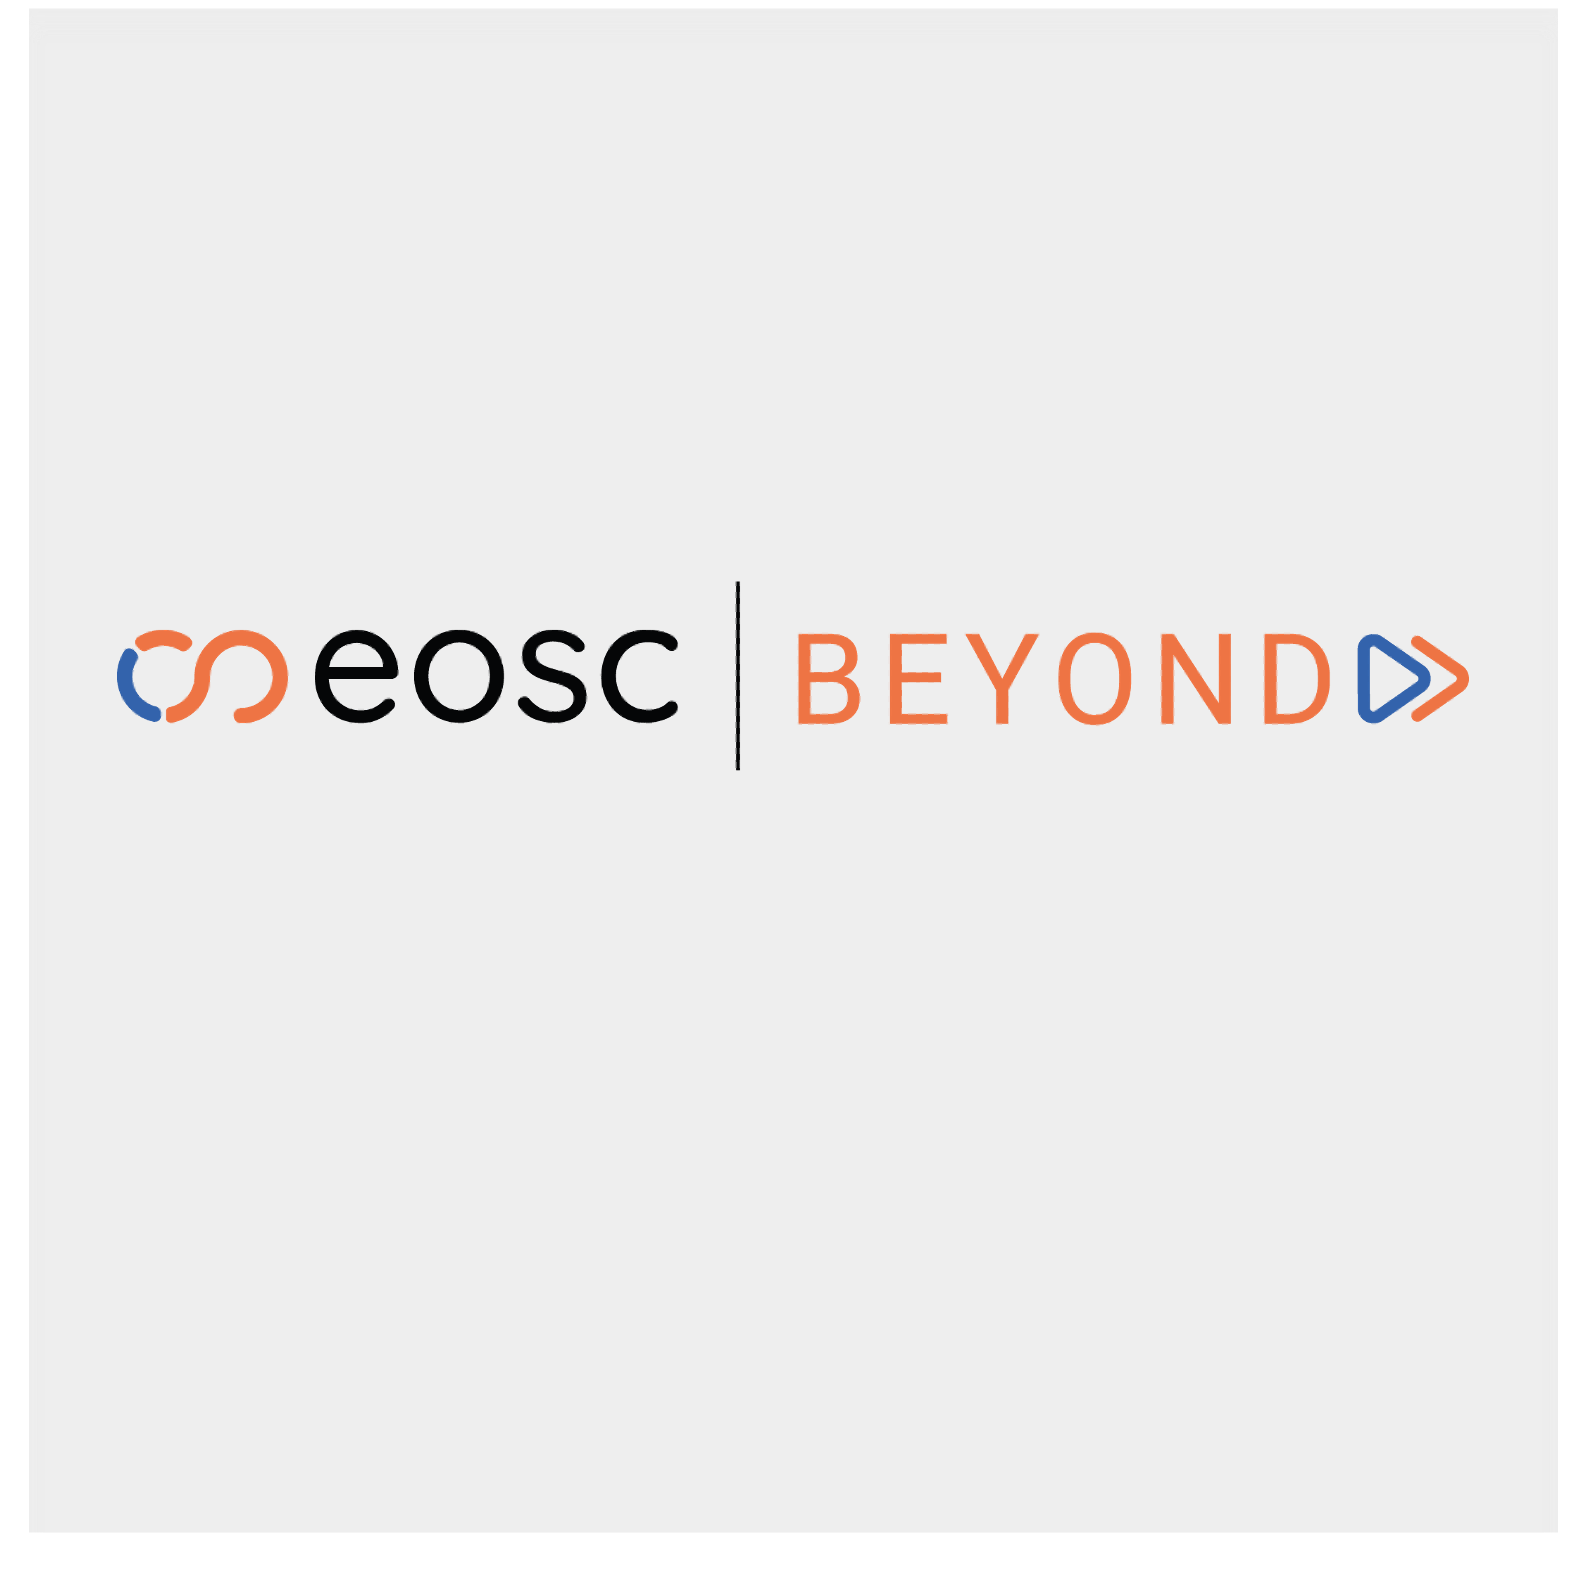 eosc beyond